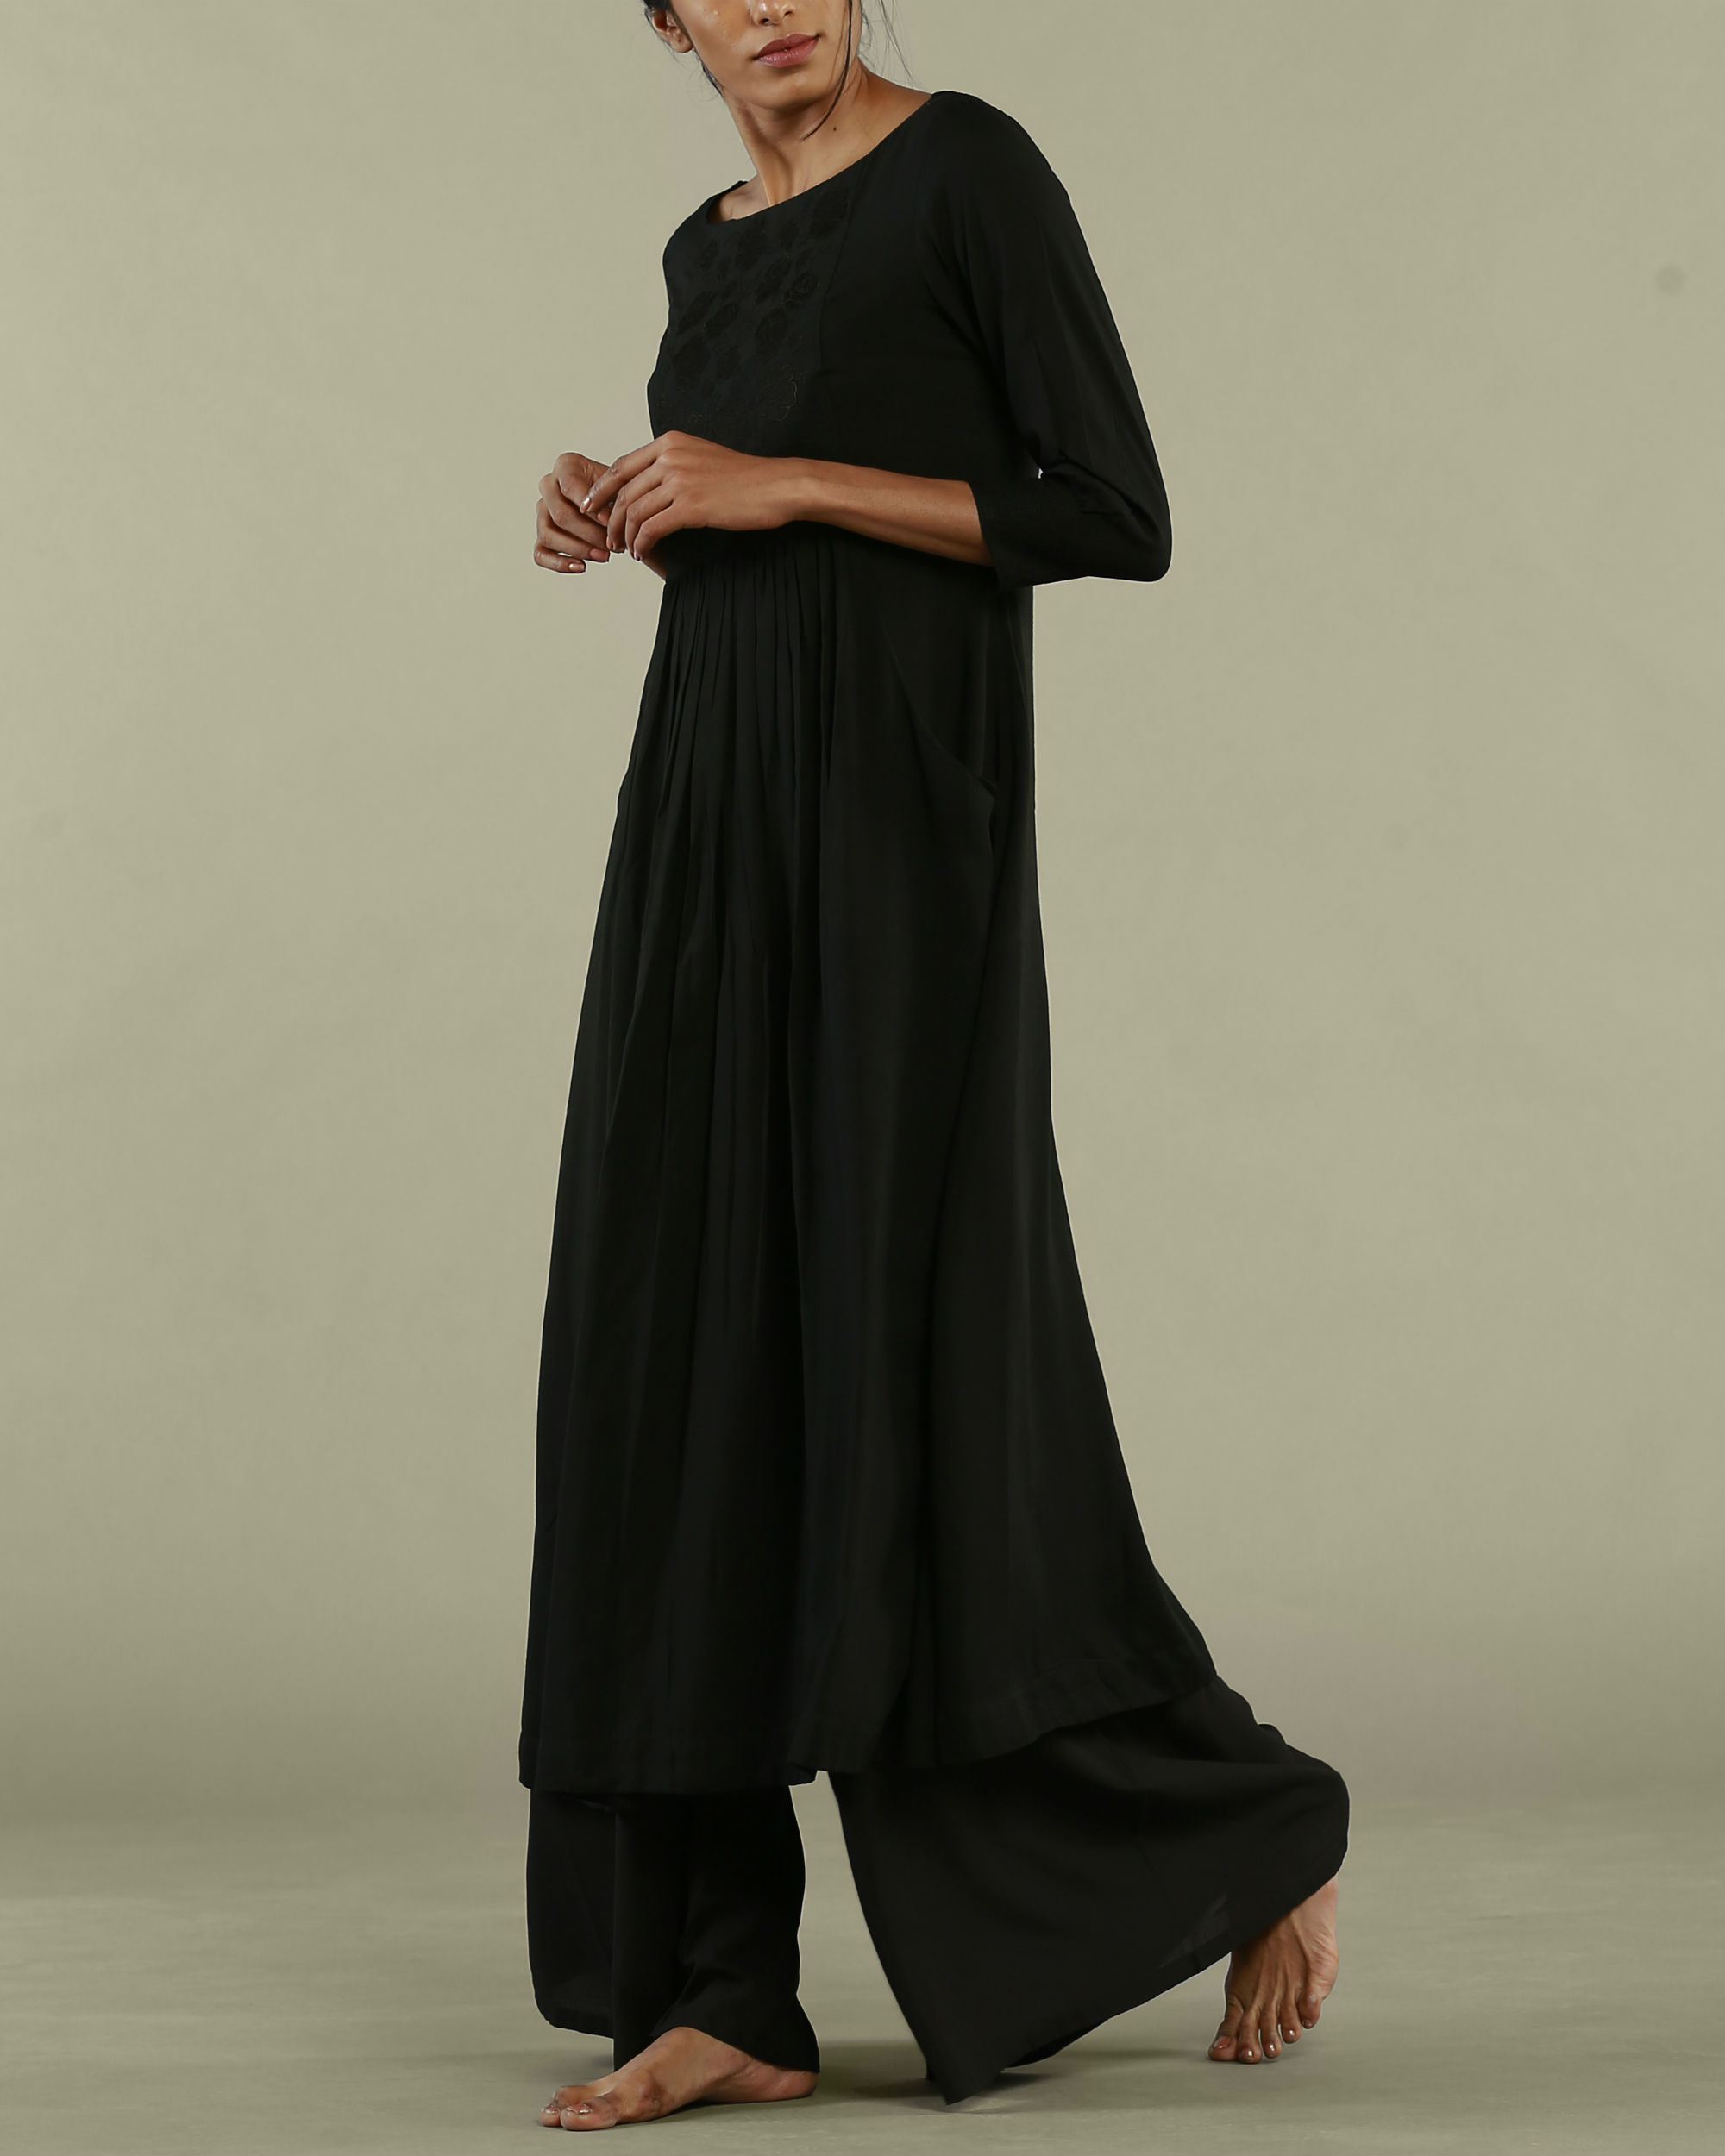 Black dress style tunic by Mantra | The Secret Label